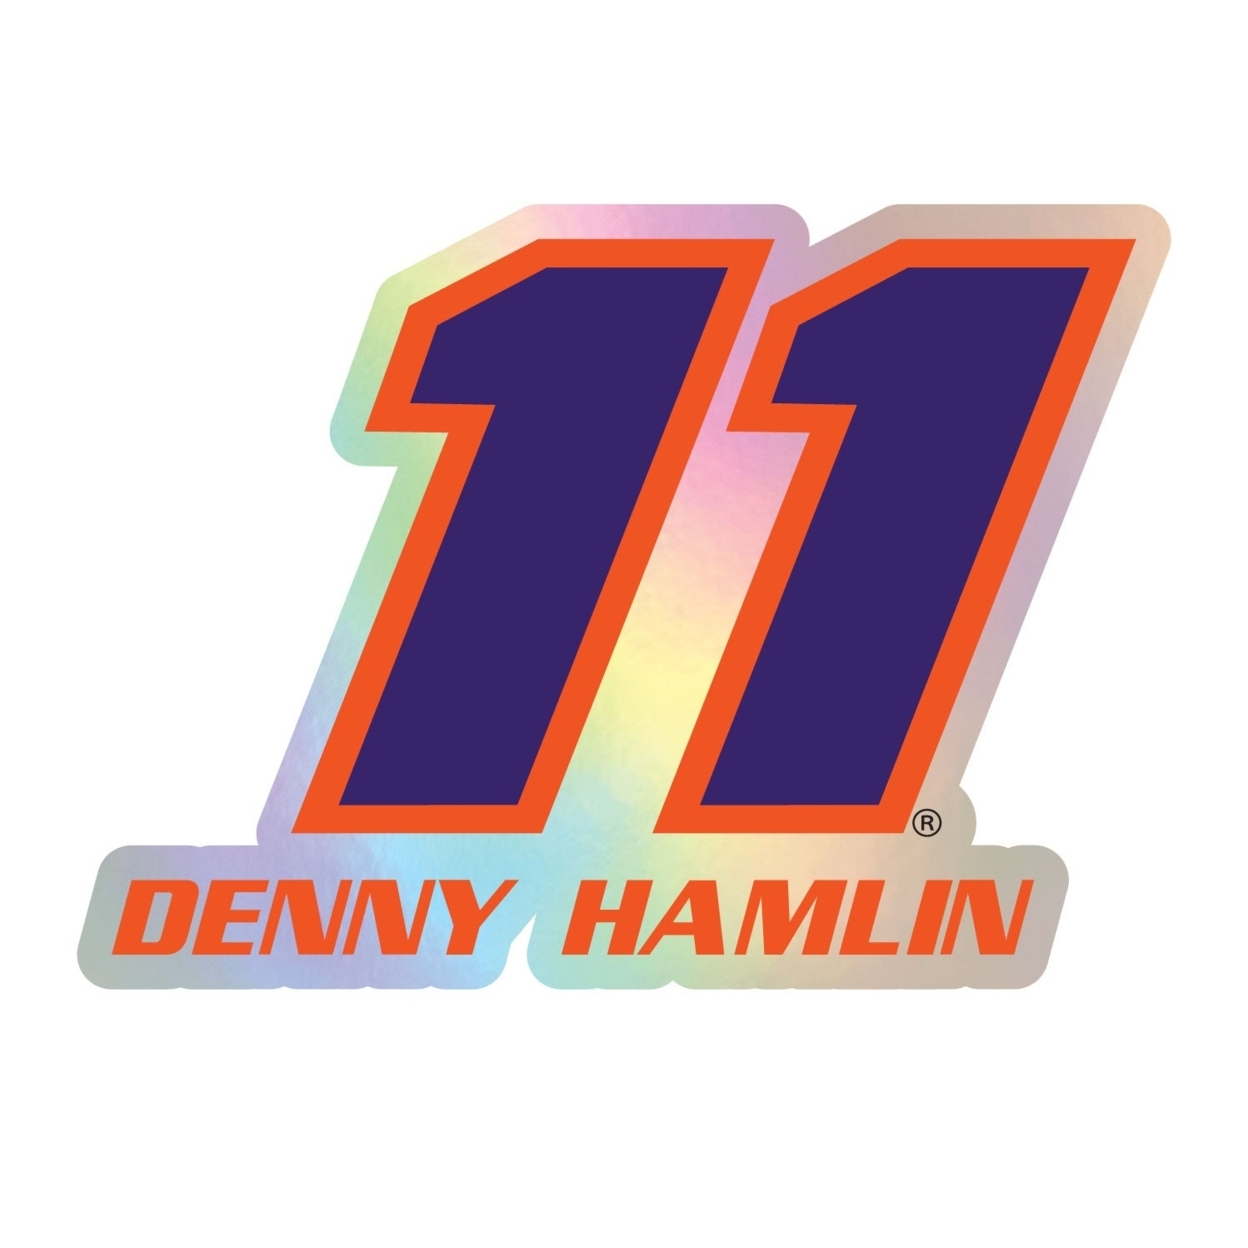 #11 Denny Hamlin Laser Cut Holographic Decal - 6-Inch